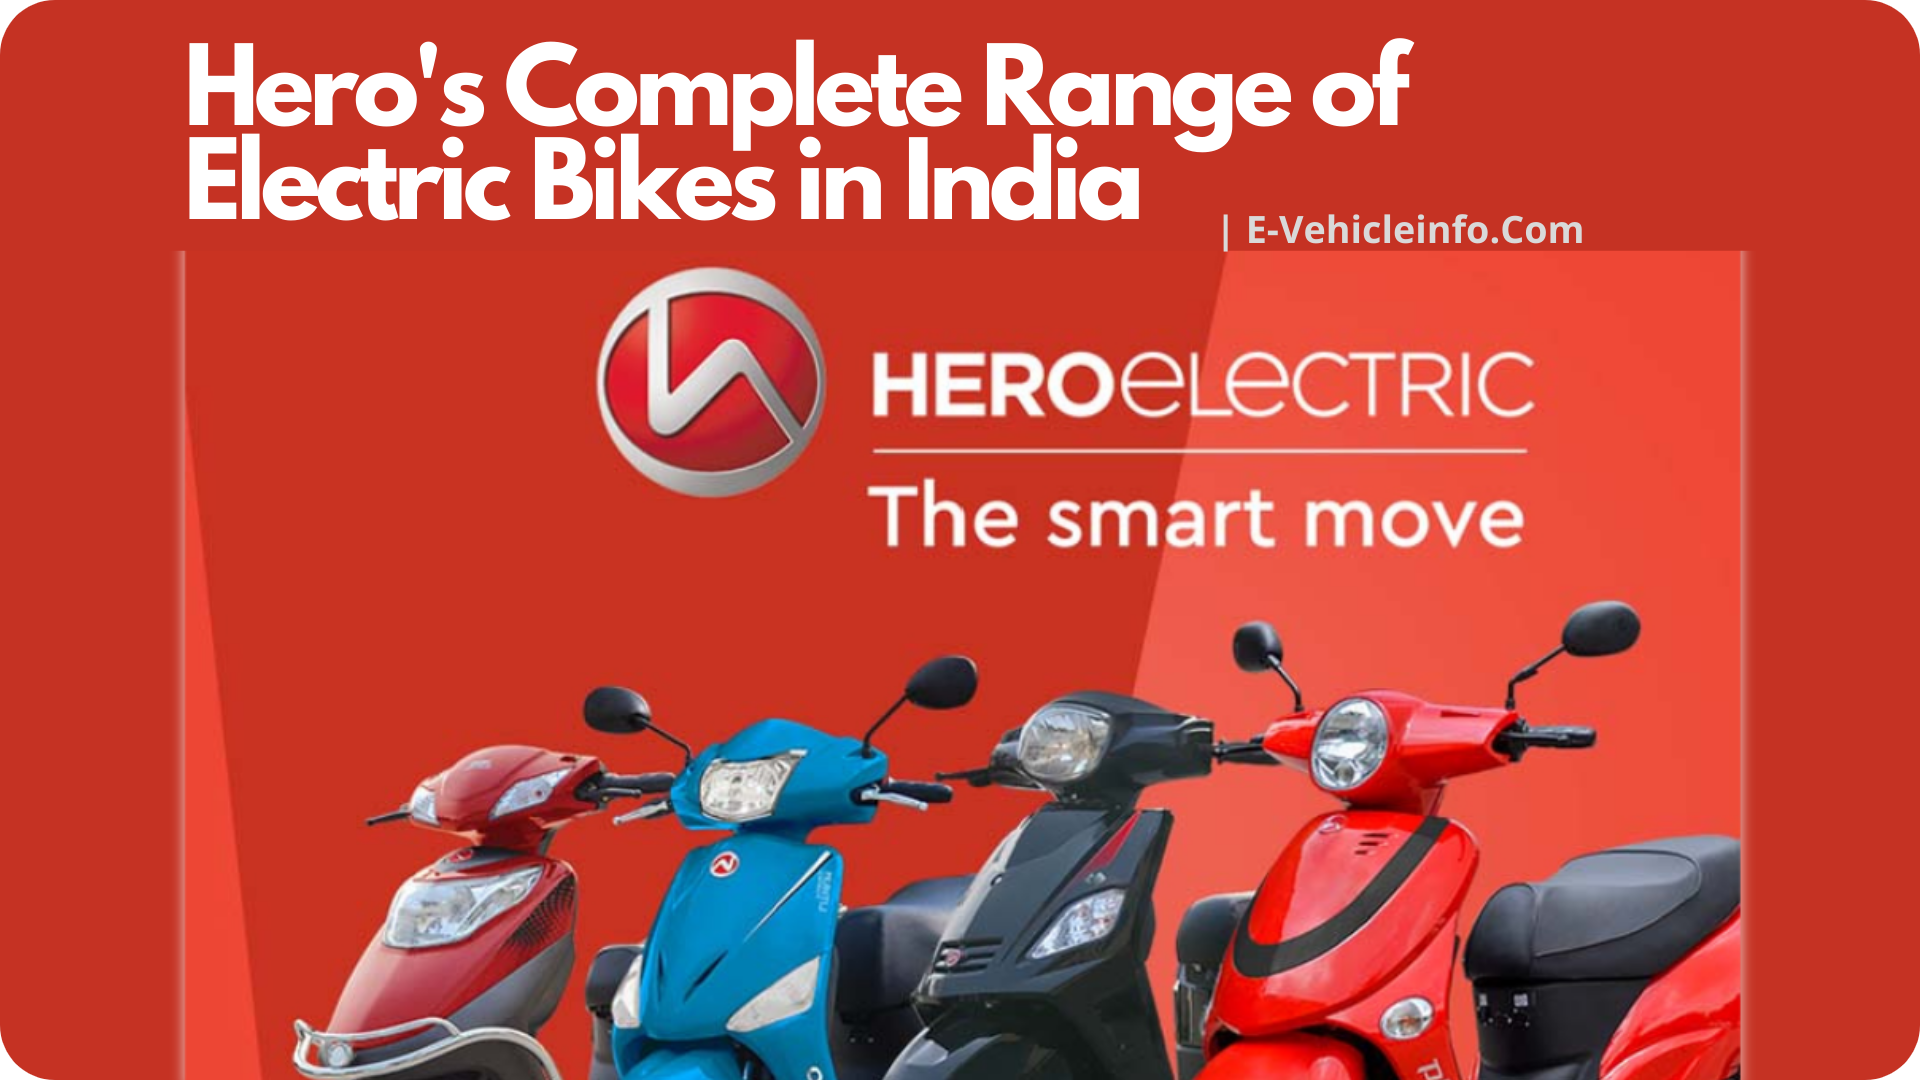 https://e-vehicleinfo.com/hero-electric-bikes-in-india-heros-complete-range-of-e-bikes/